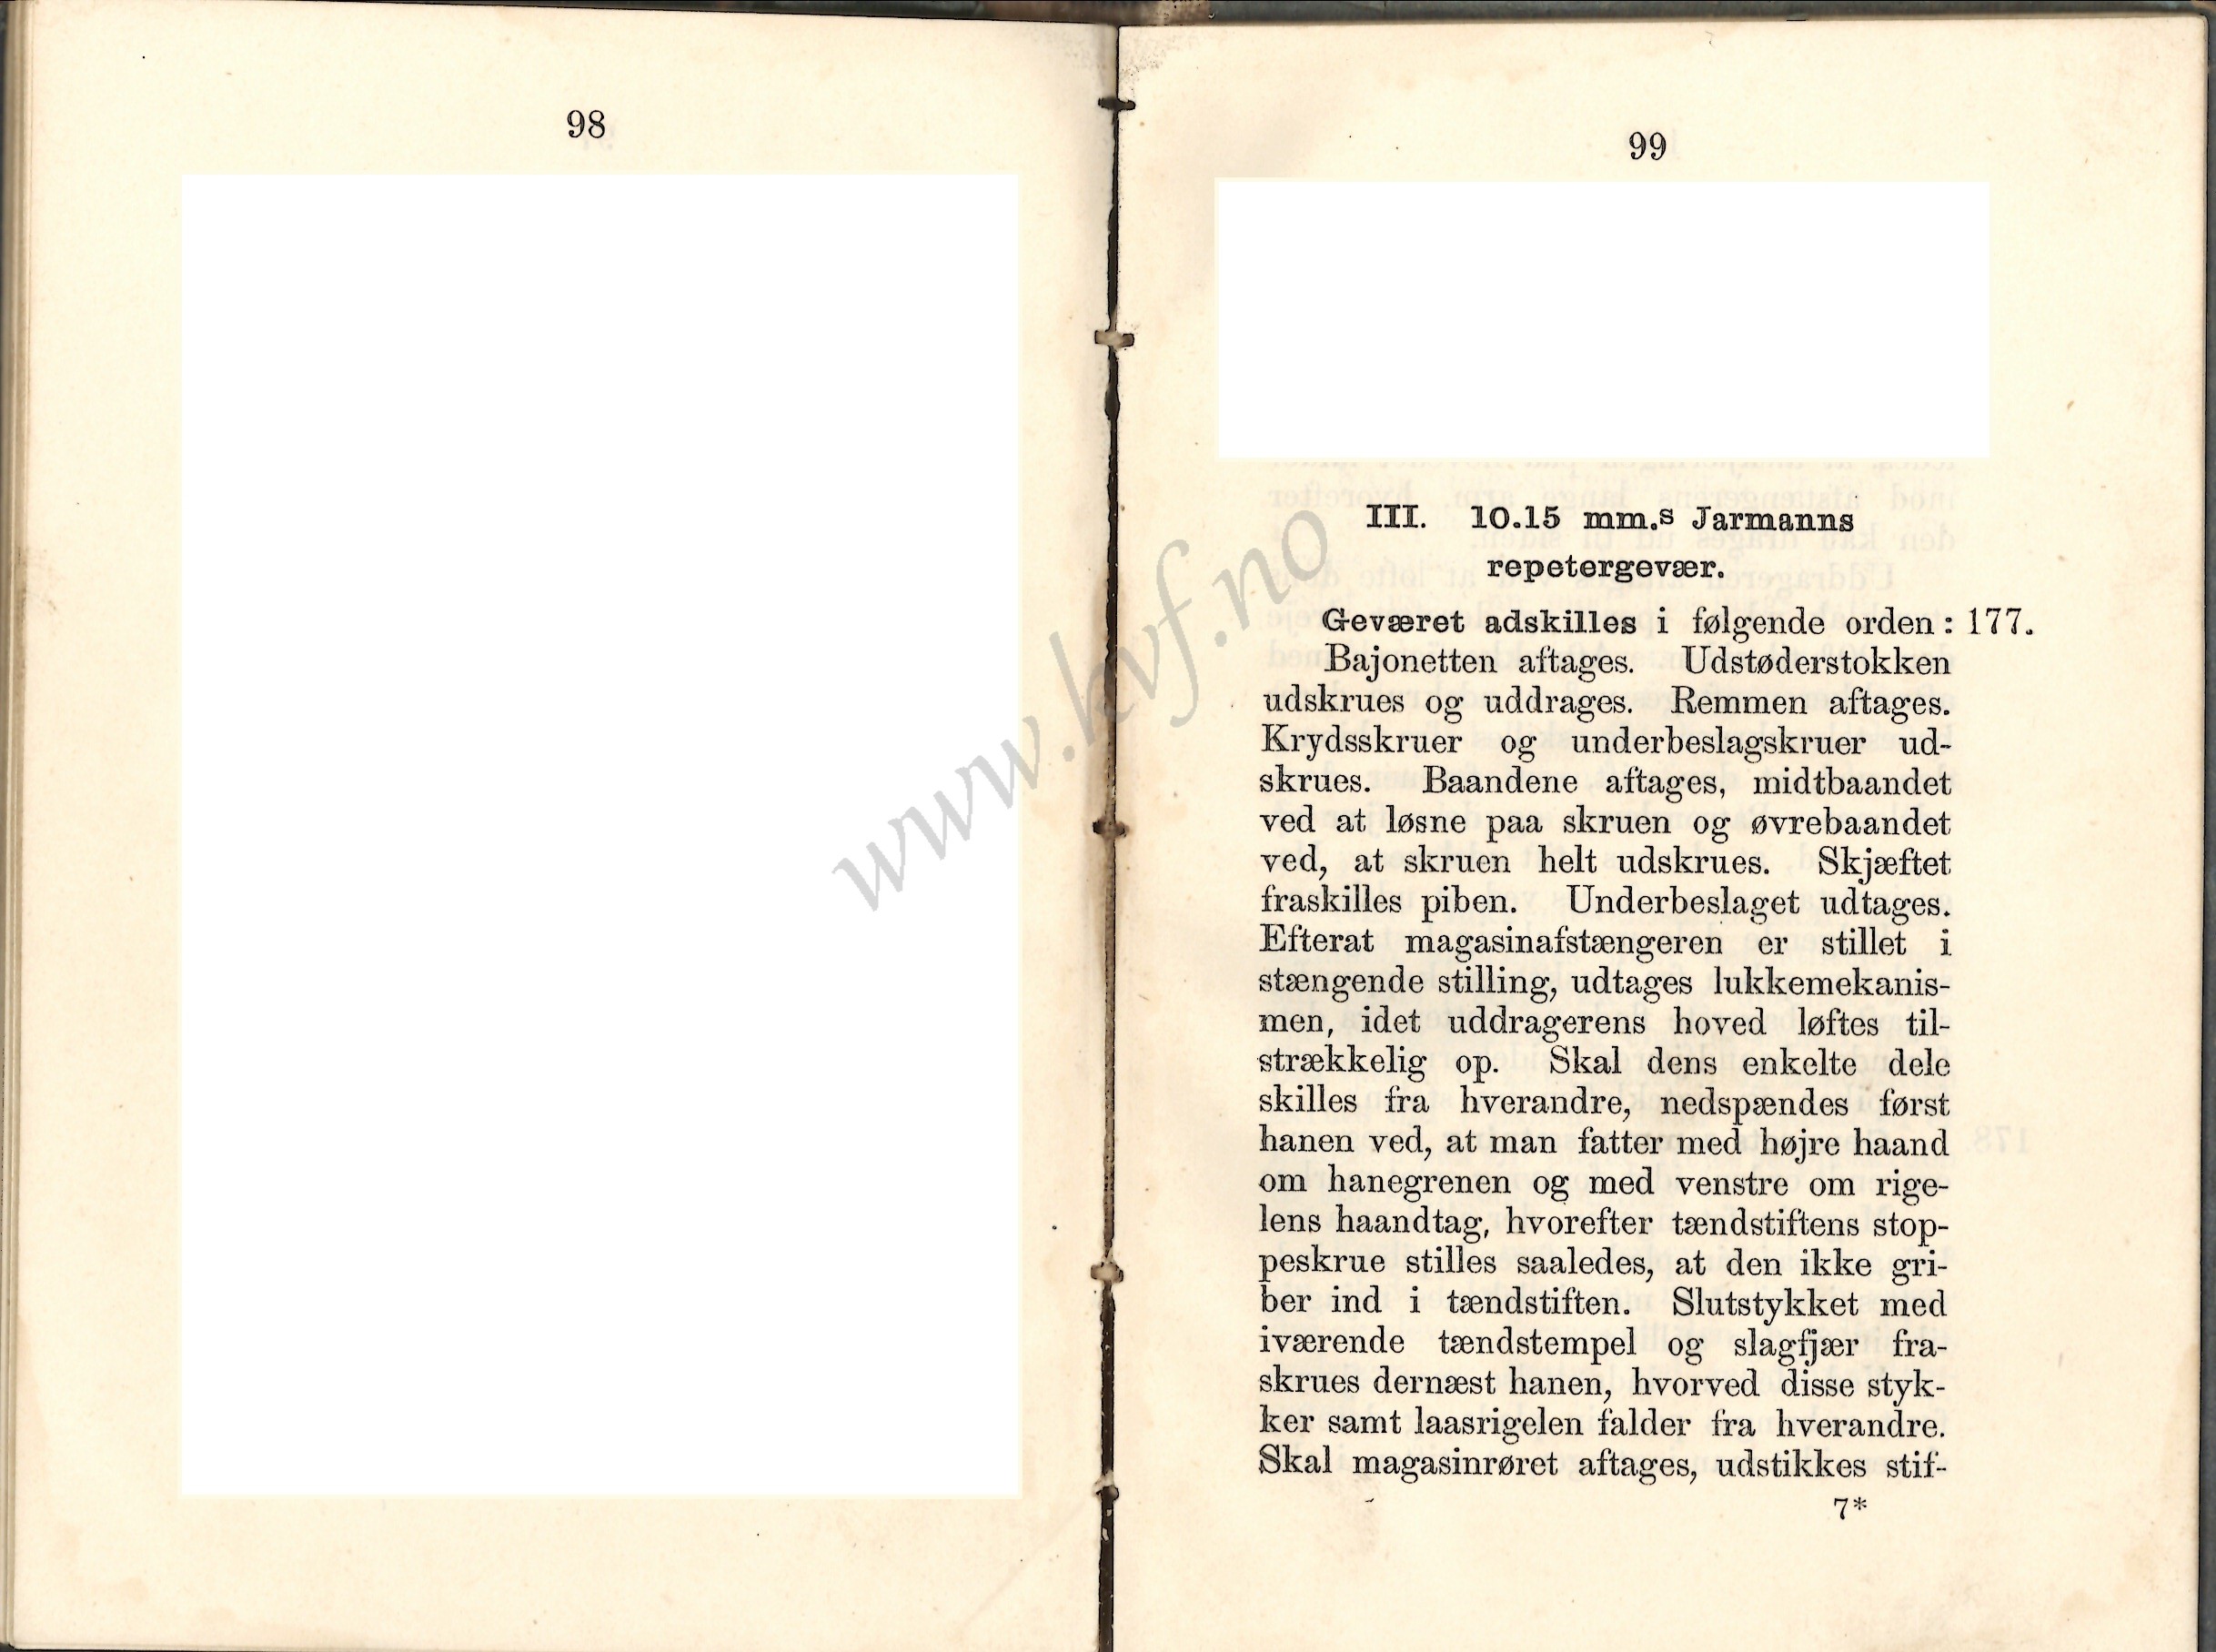 ./doc/reglement/Inf1888/Haandbok-Menig-Infanterist-1888-7.jpg